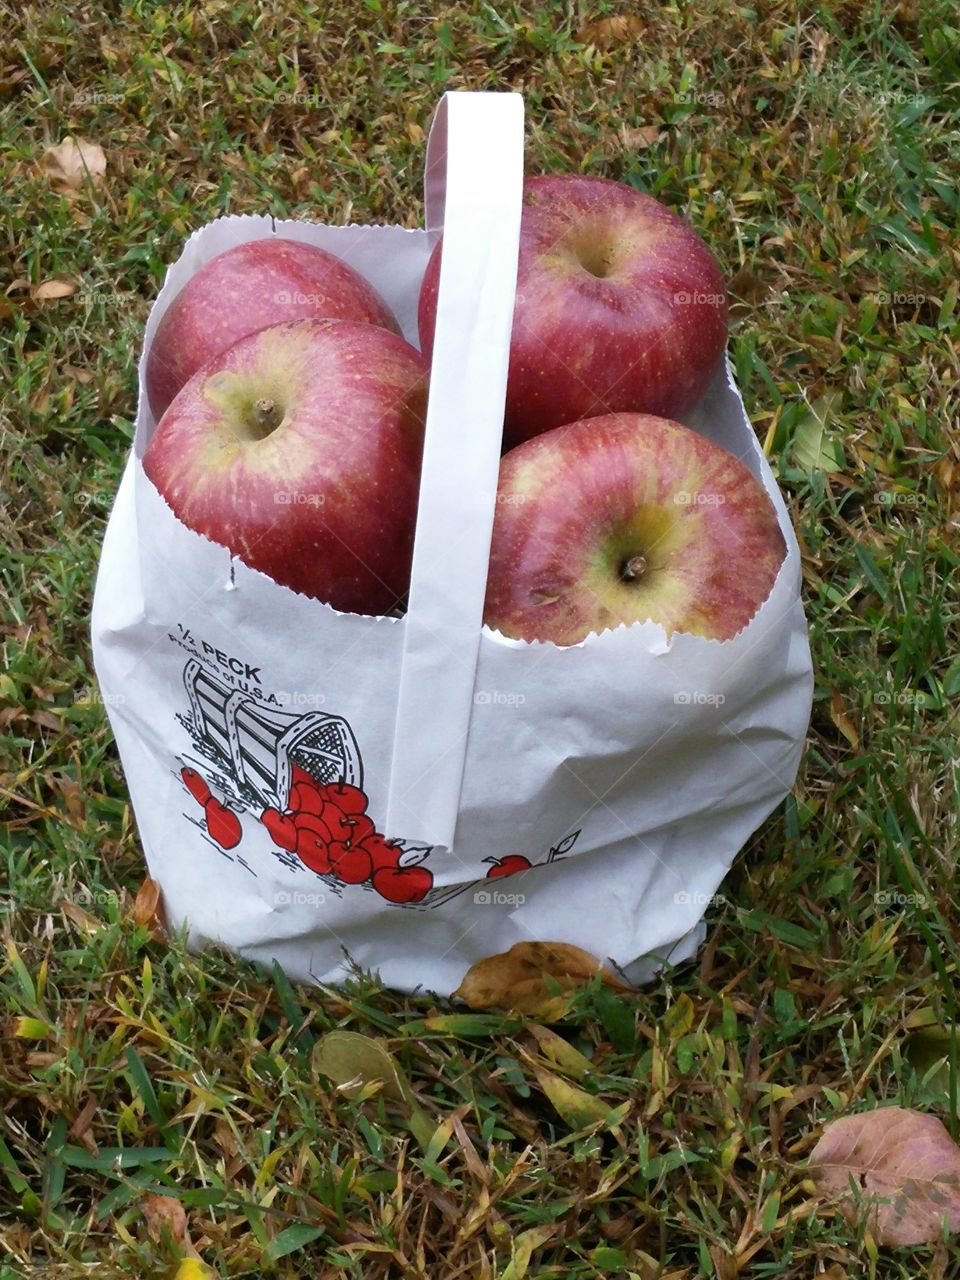 Virginia Apple's. Stayman apple's from Ferrum, VA